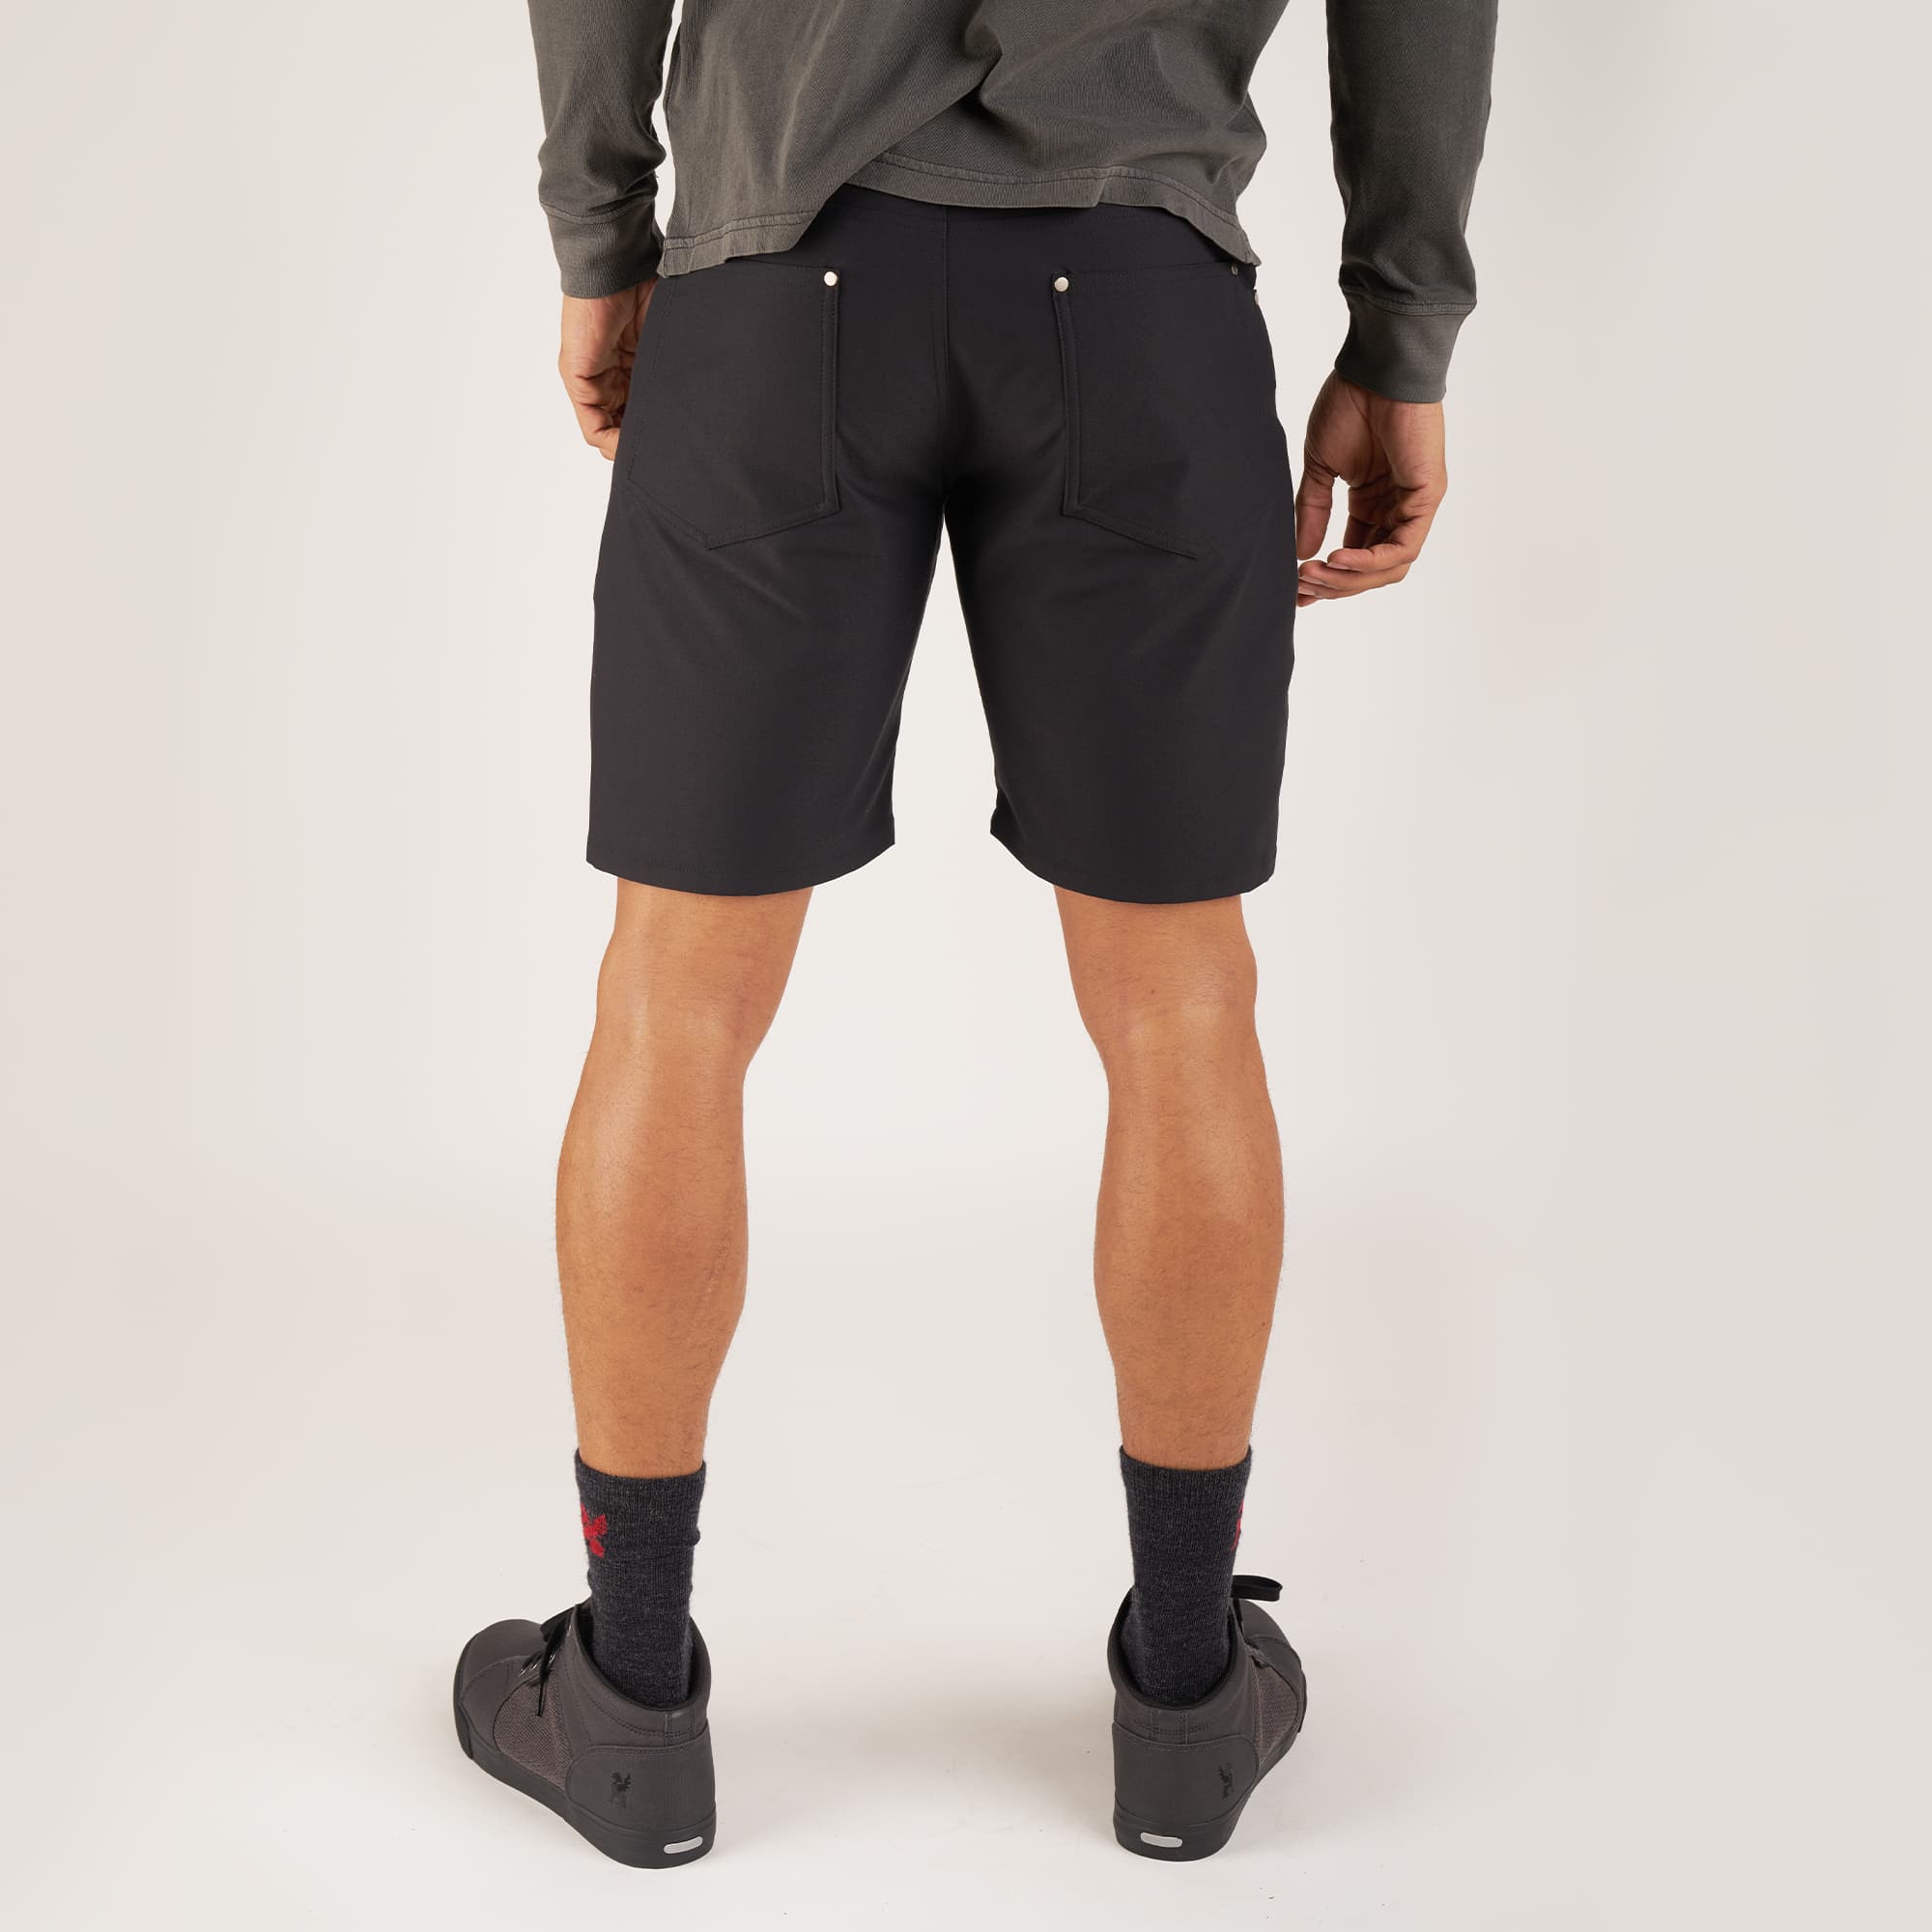 Men's Madrona 5-pocket short in black worn by a man back view #color_black